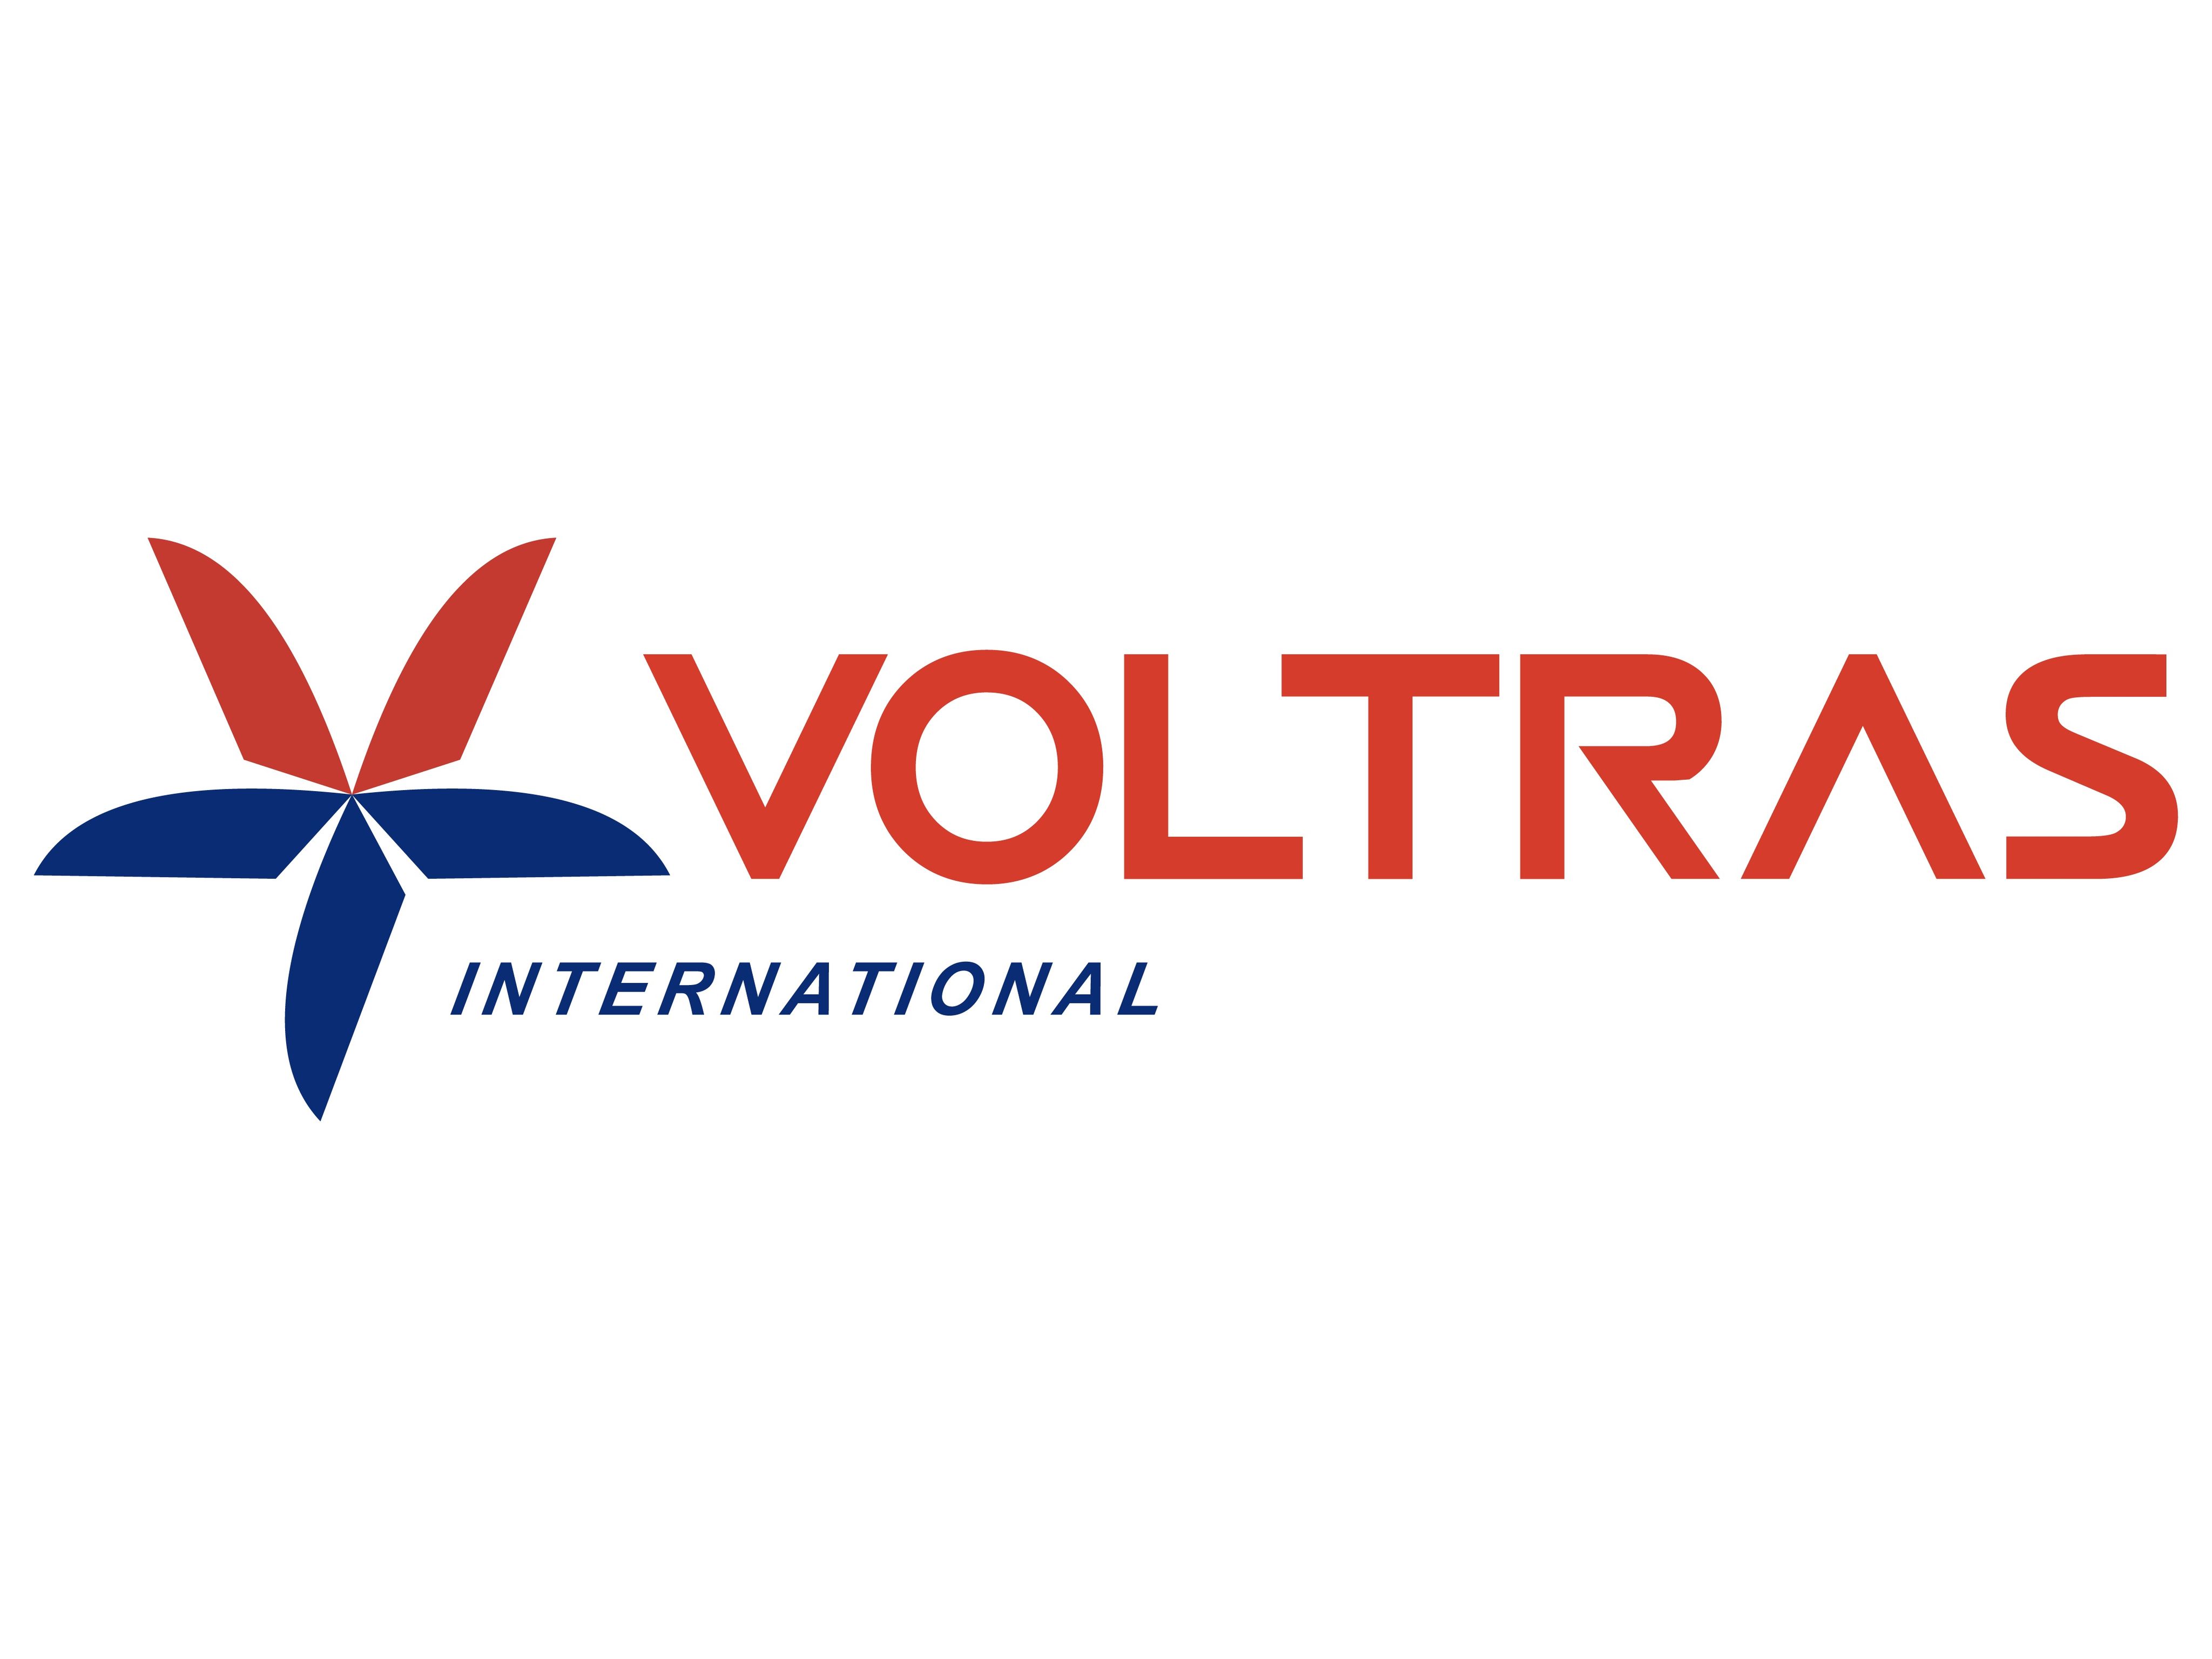 Voltas - Crunchbase Company Profile & Funding